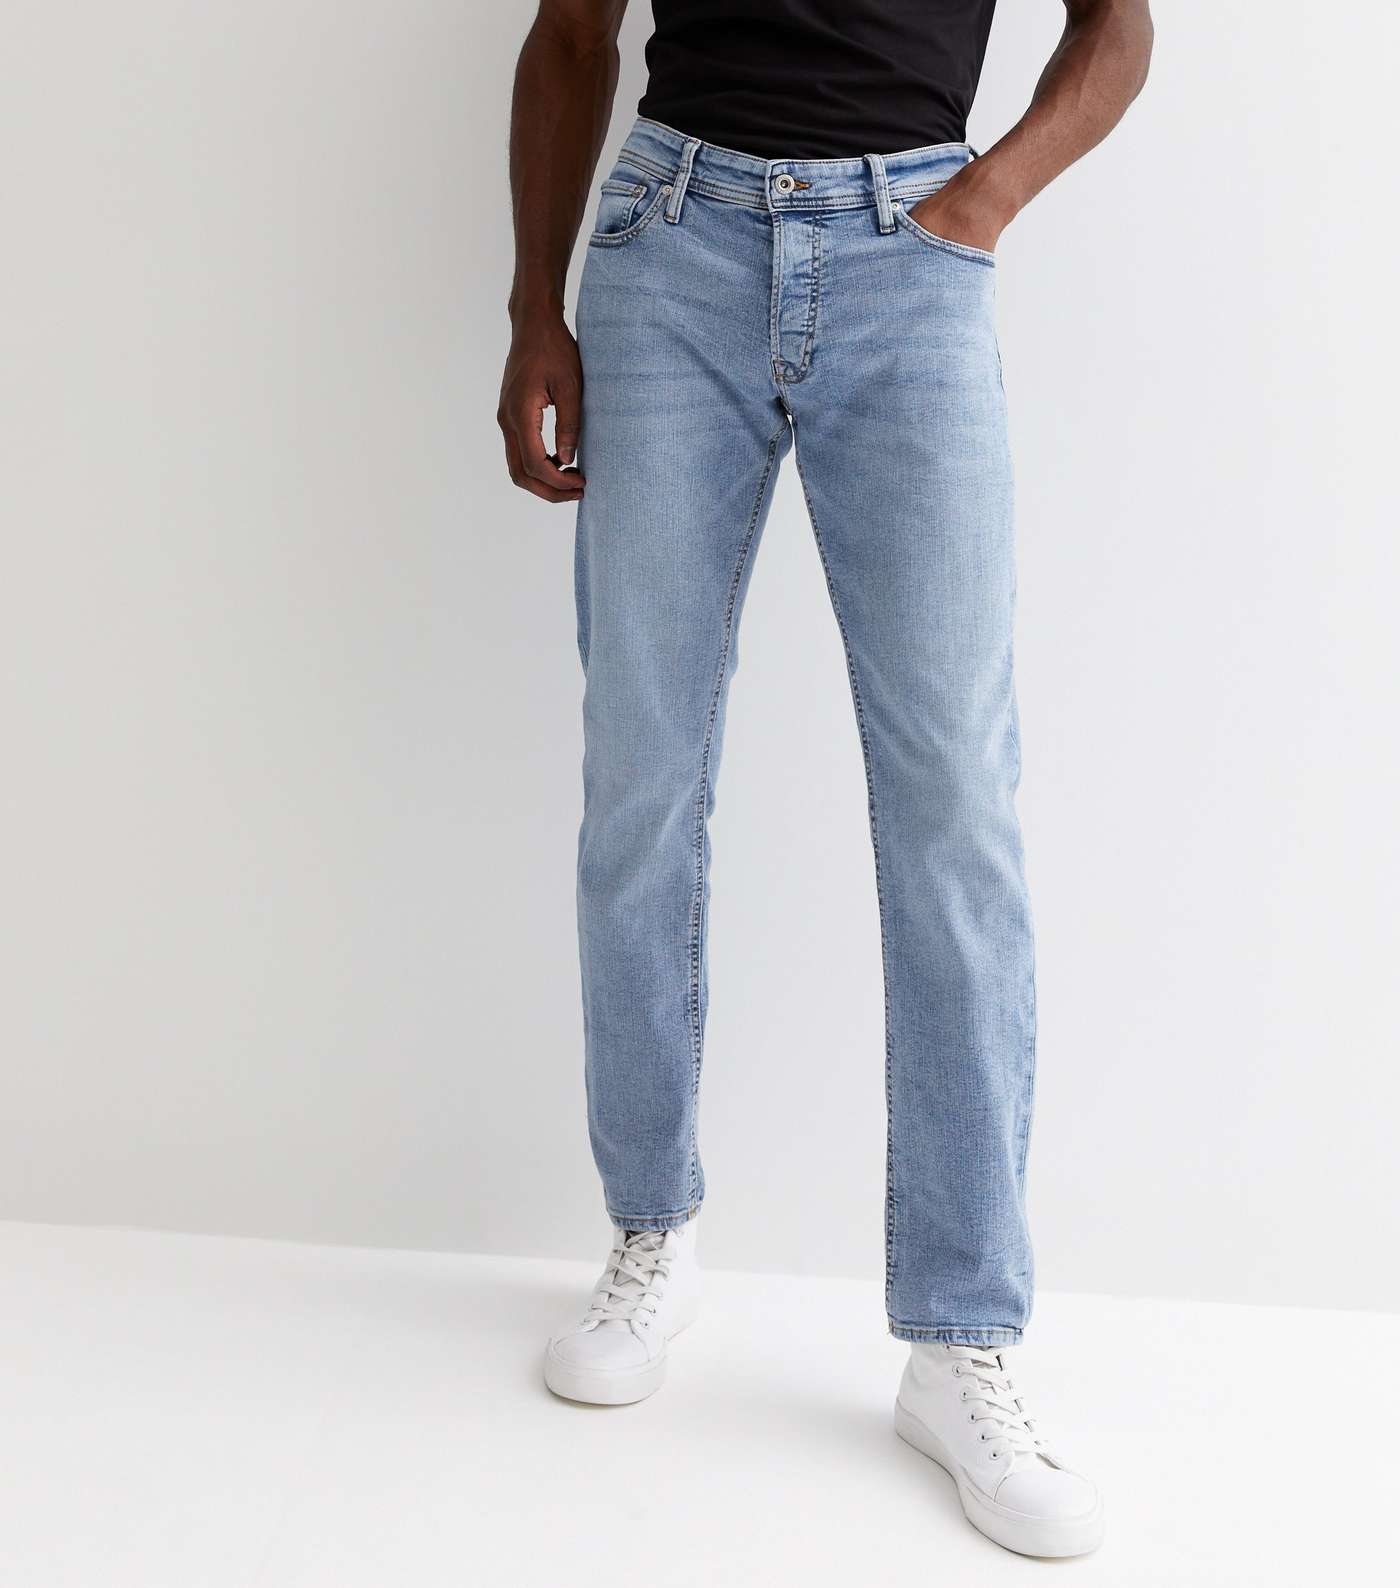 Jack & Jones Pale Blue Skinny Fit Jeans Image 2